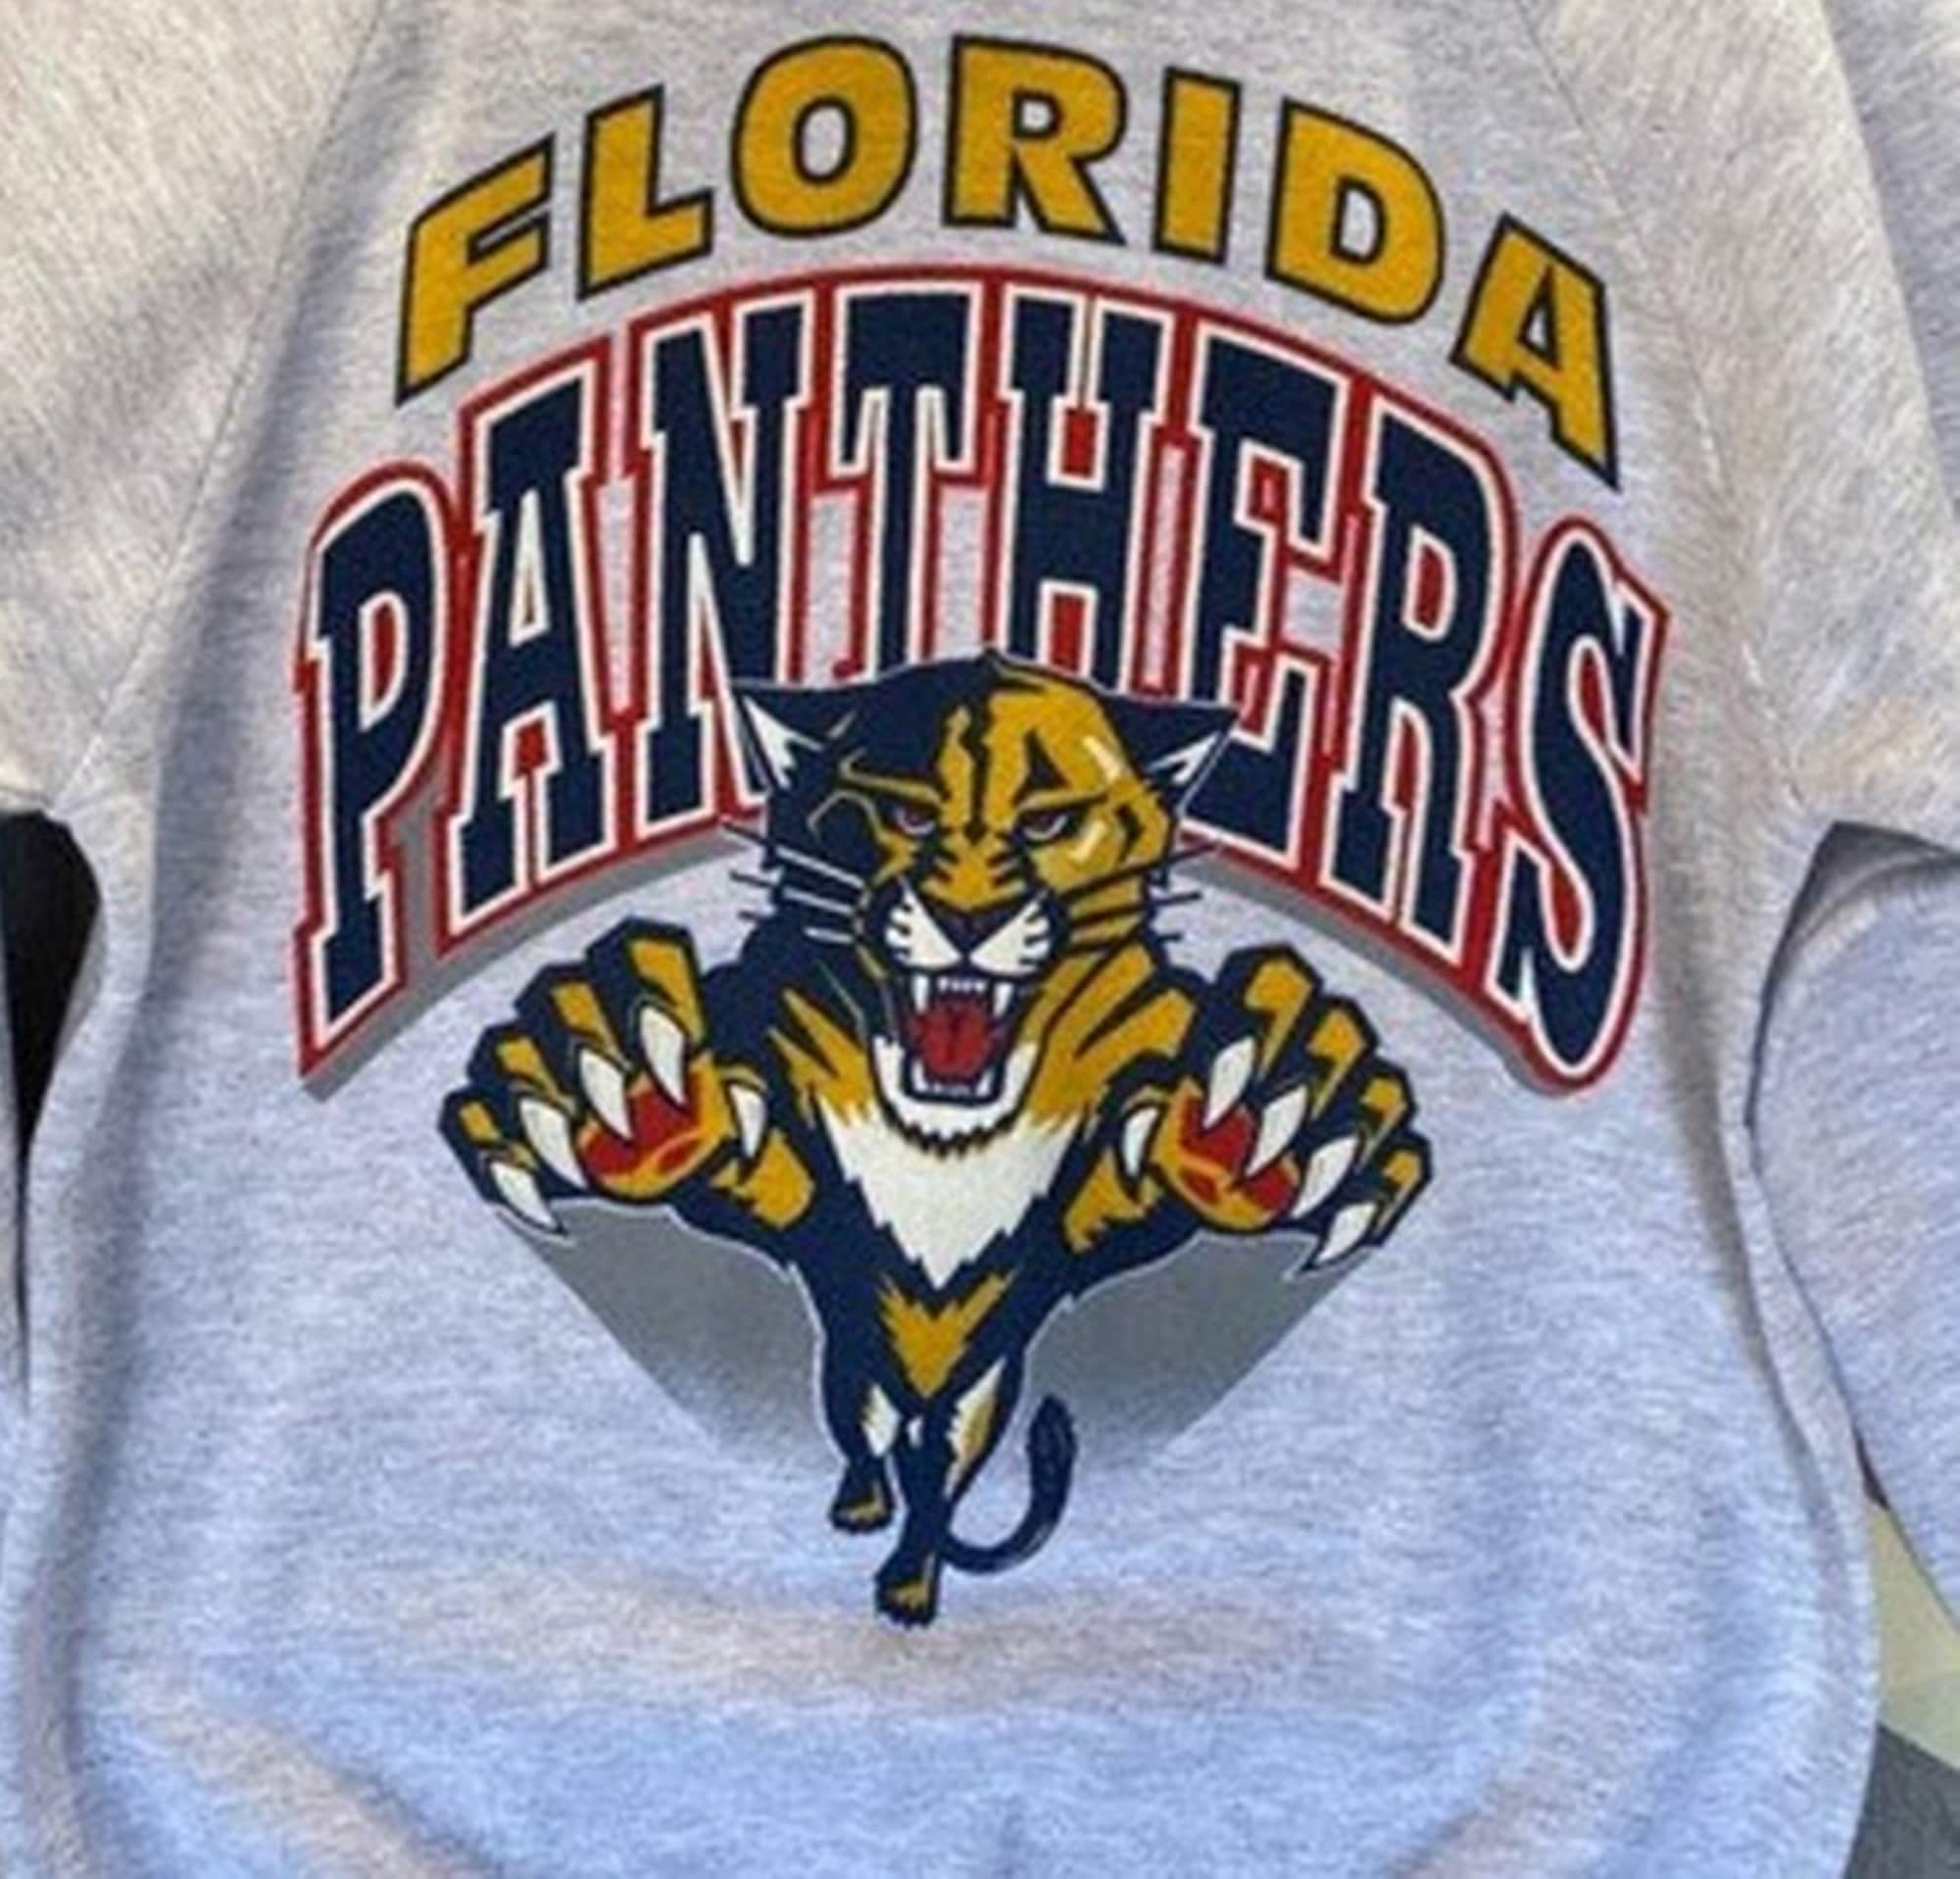 Florida Panthers Sweatshirt Vintage College Classic Hockey Fan - Anynee